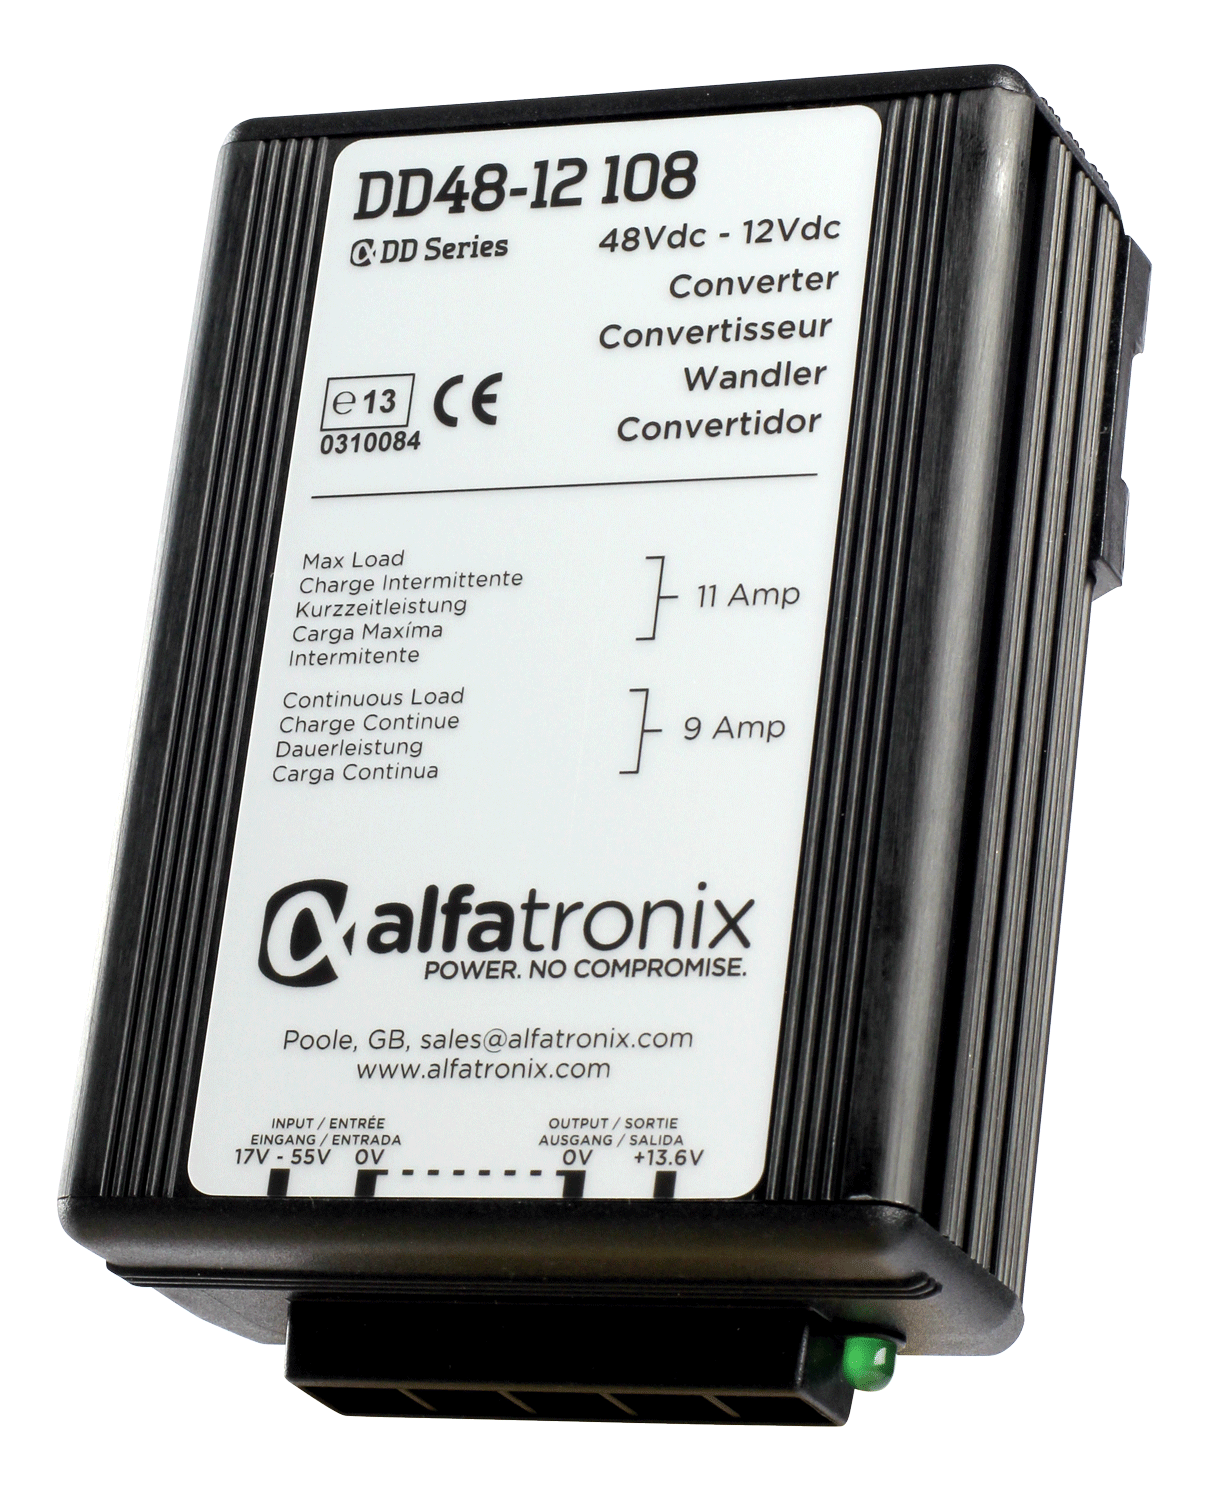 DC DC power supply stabilizer DD48-12-108